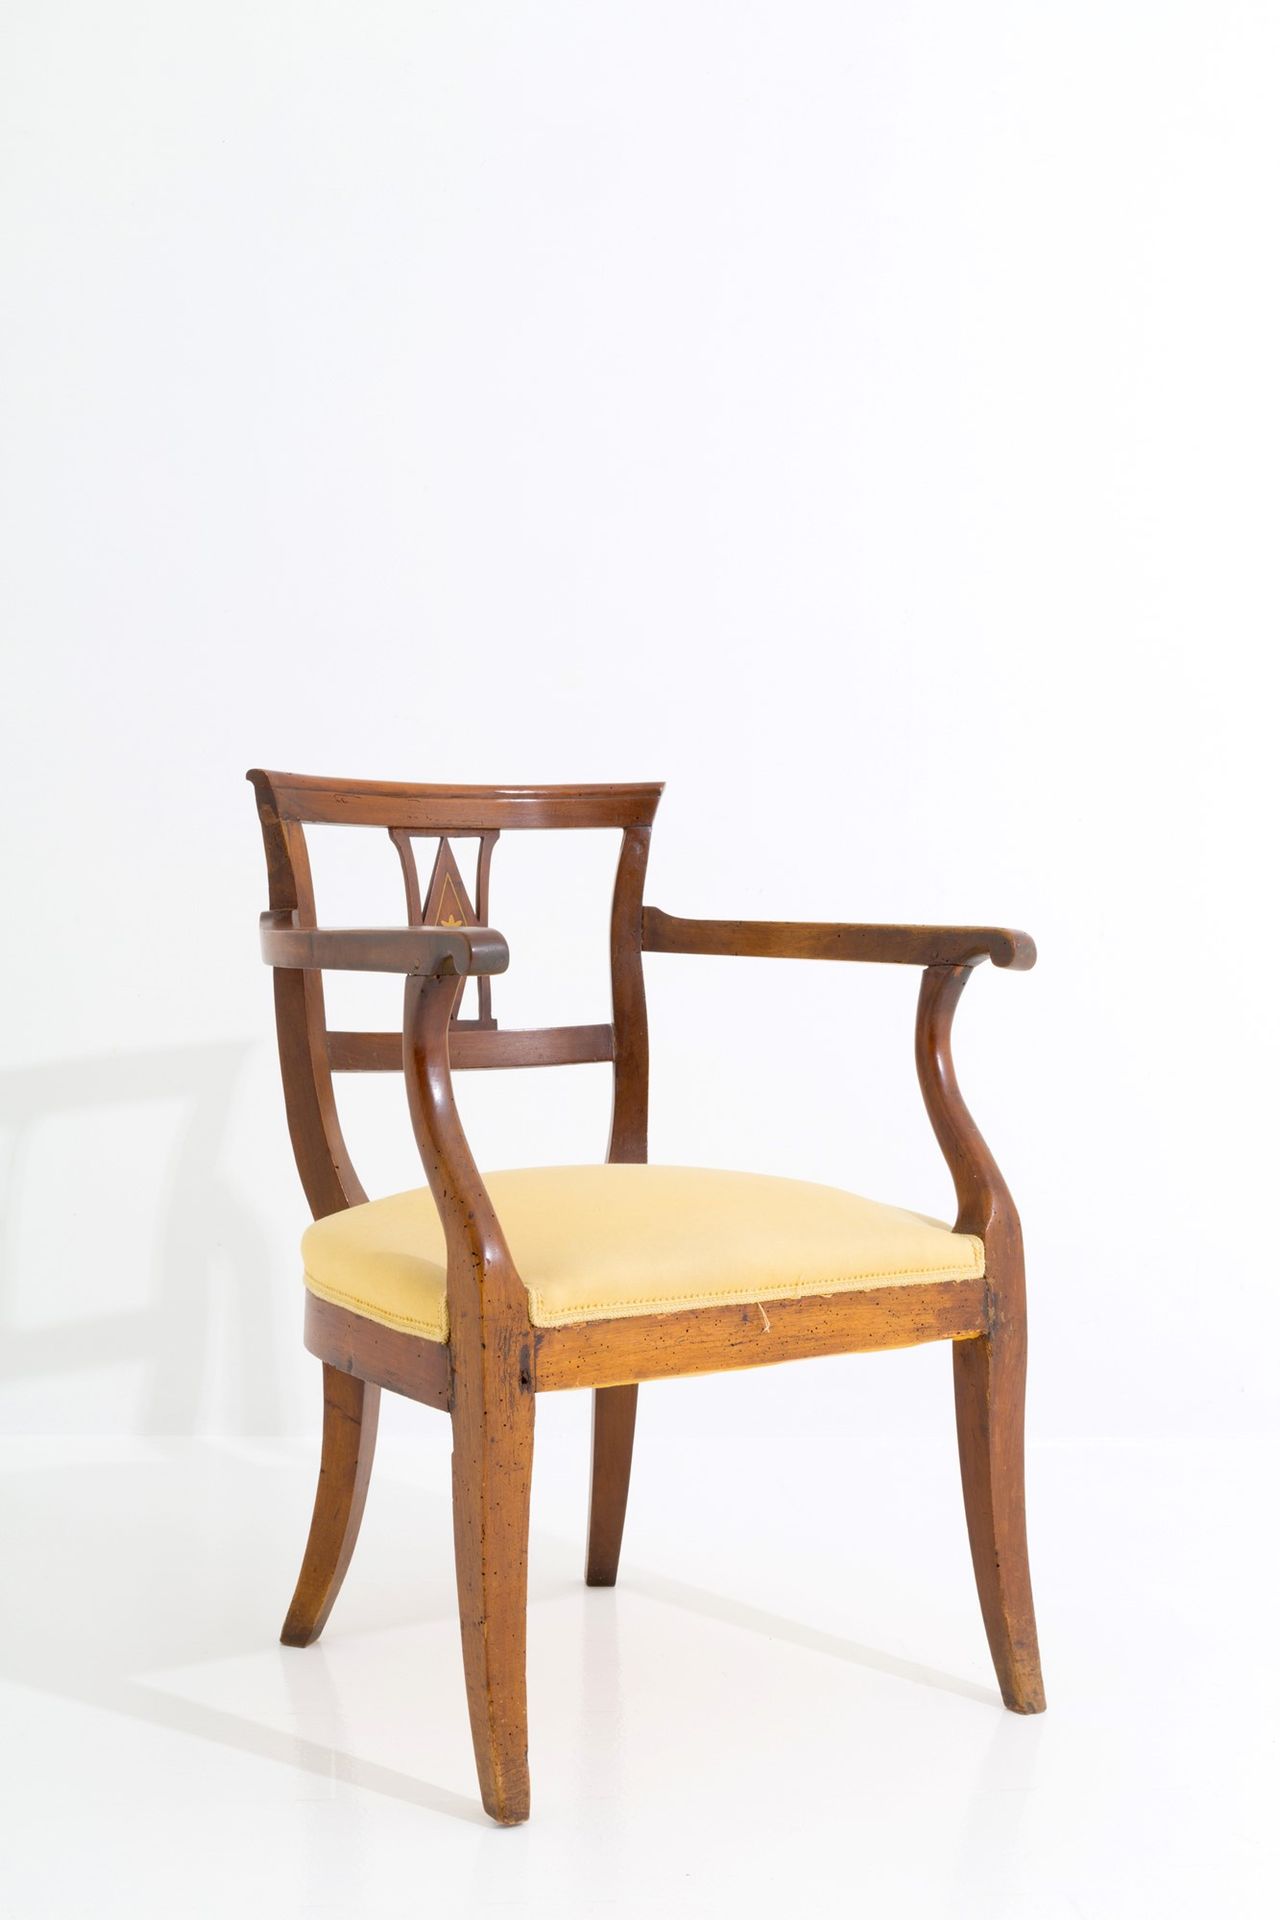 Armchair with perforated backrest 胡桃木扶手椅，弧形穿孔椅背，镶嵌黄铜，马刀腿和软垫座椅。19世纪初。